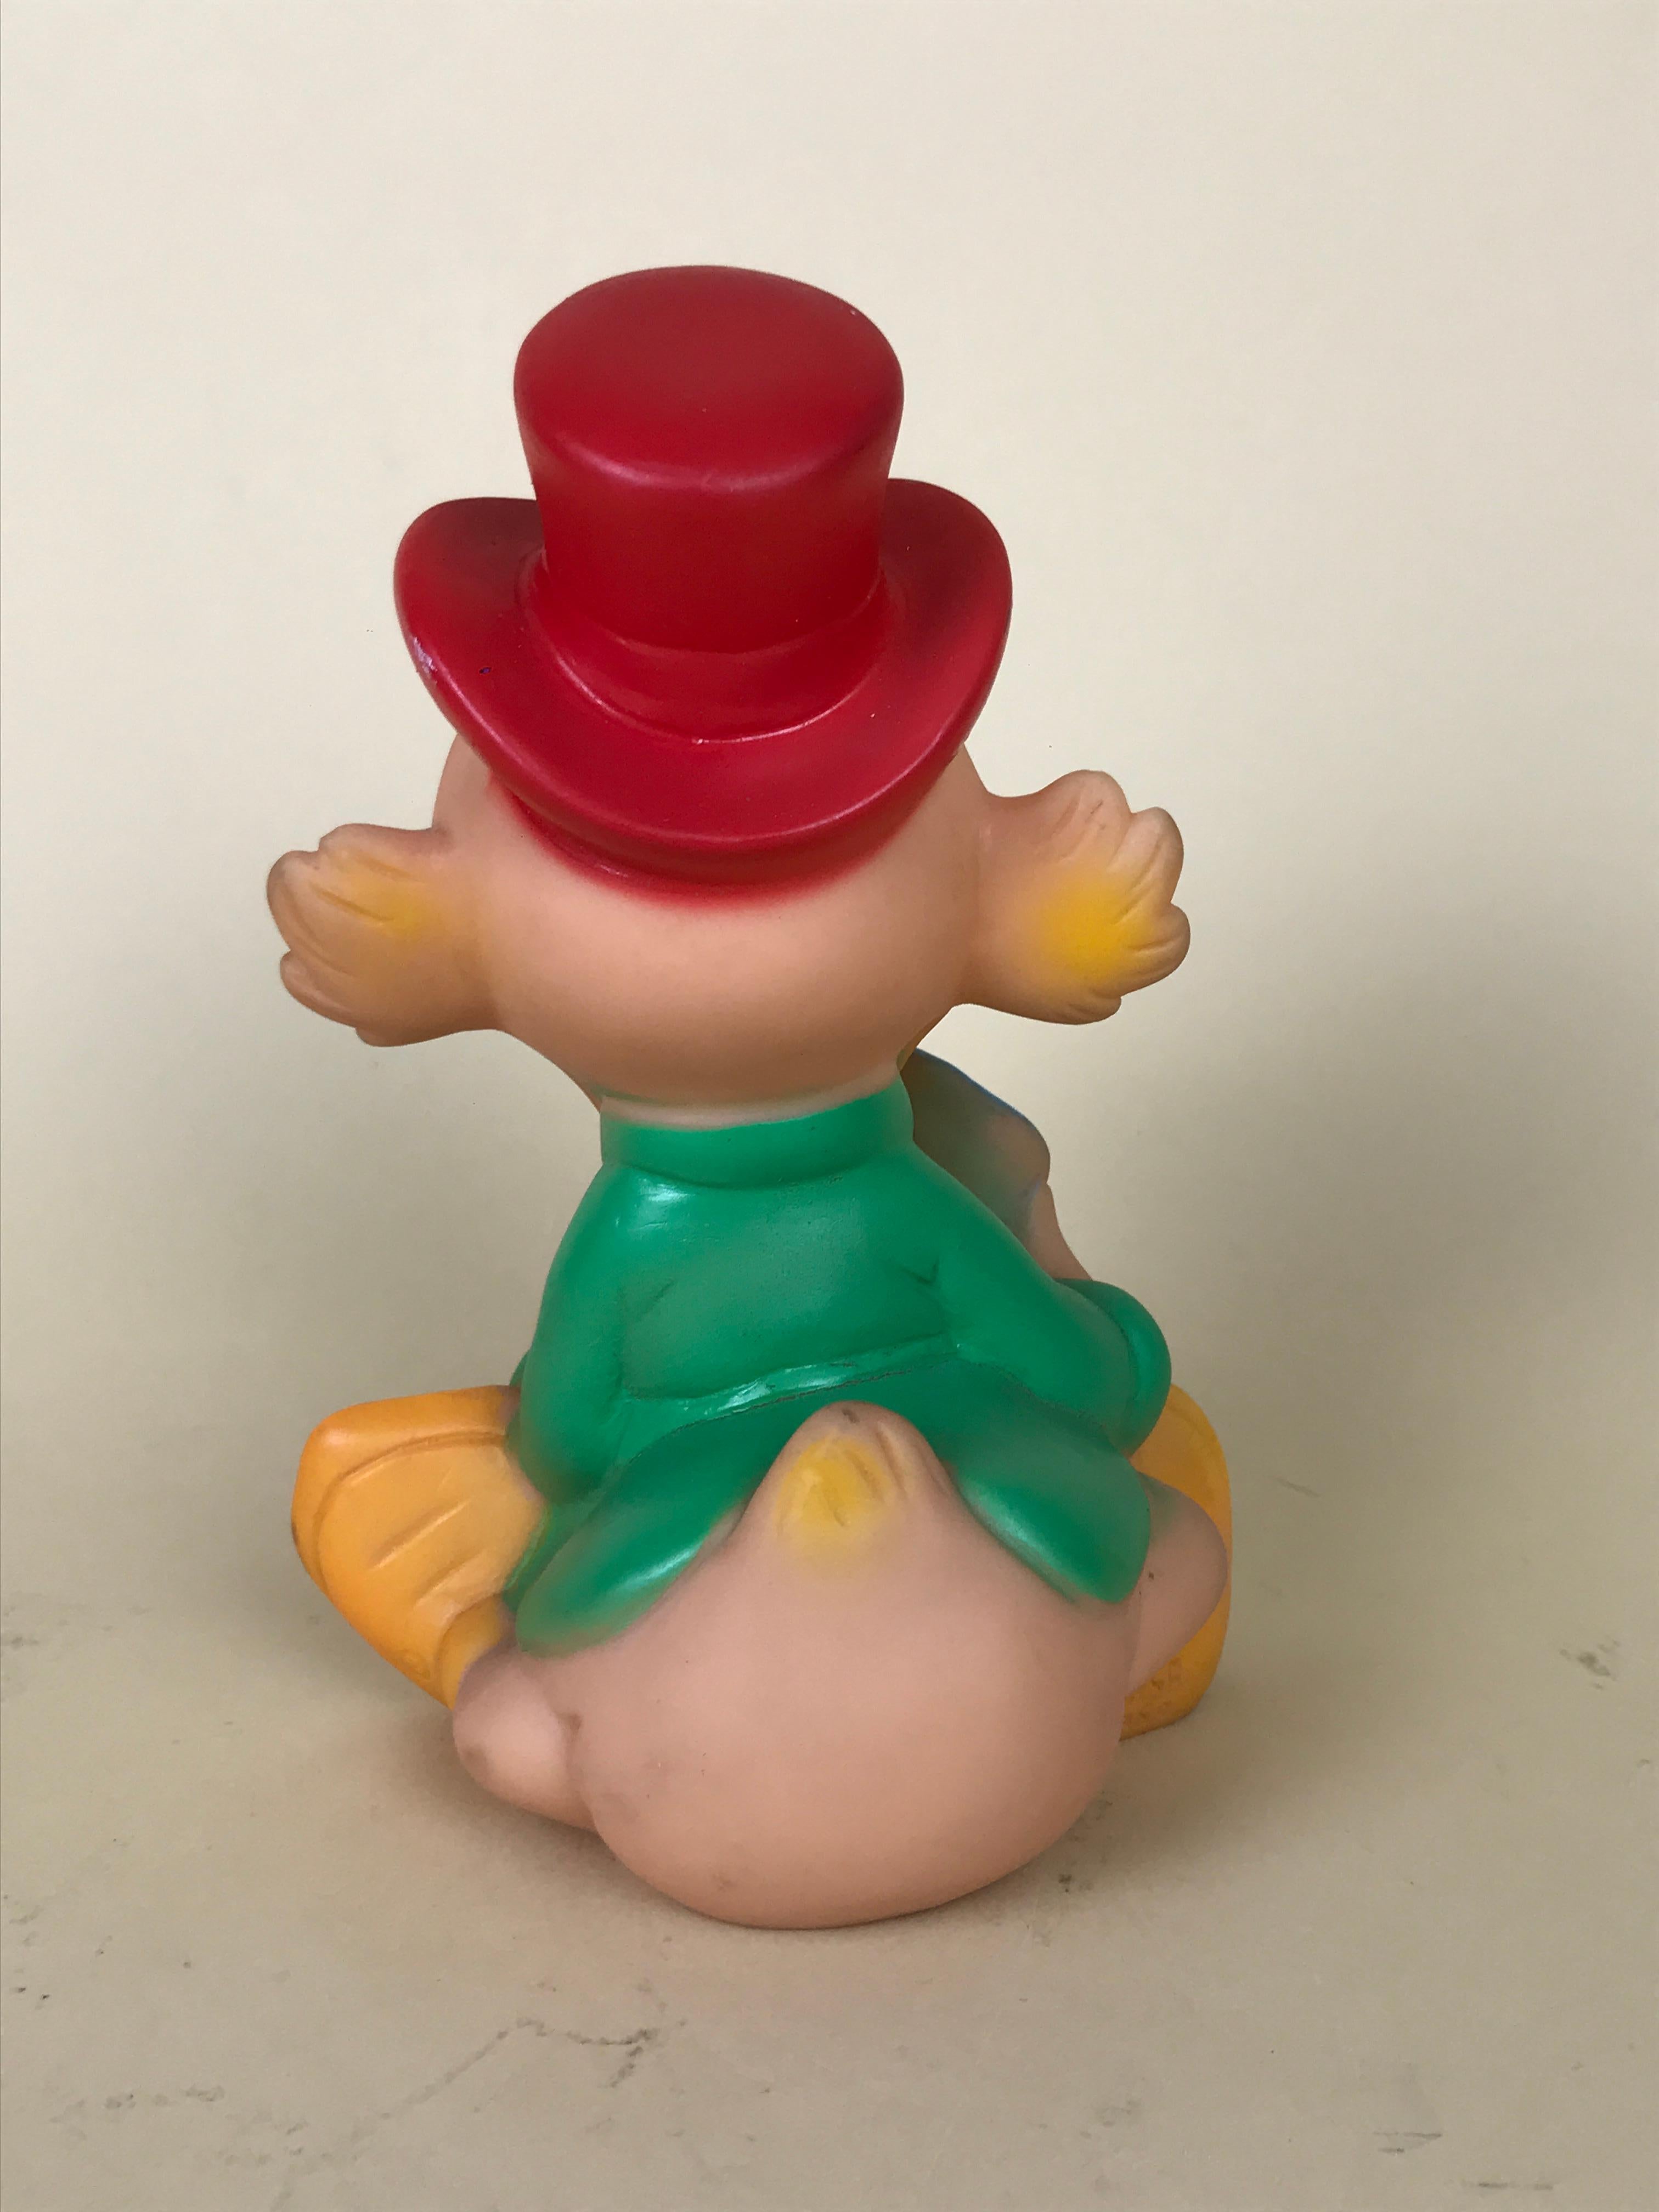 Rubber 1960s Vintage Uncle Scrooge Squeak Toy Made in Spain by Jugasa for Disney